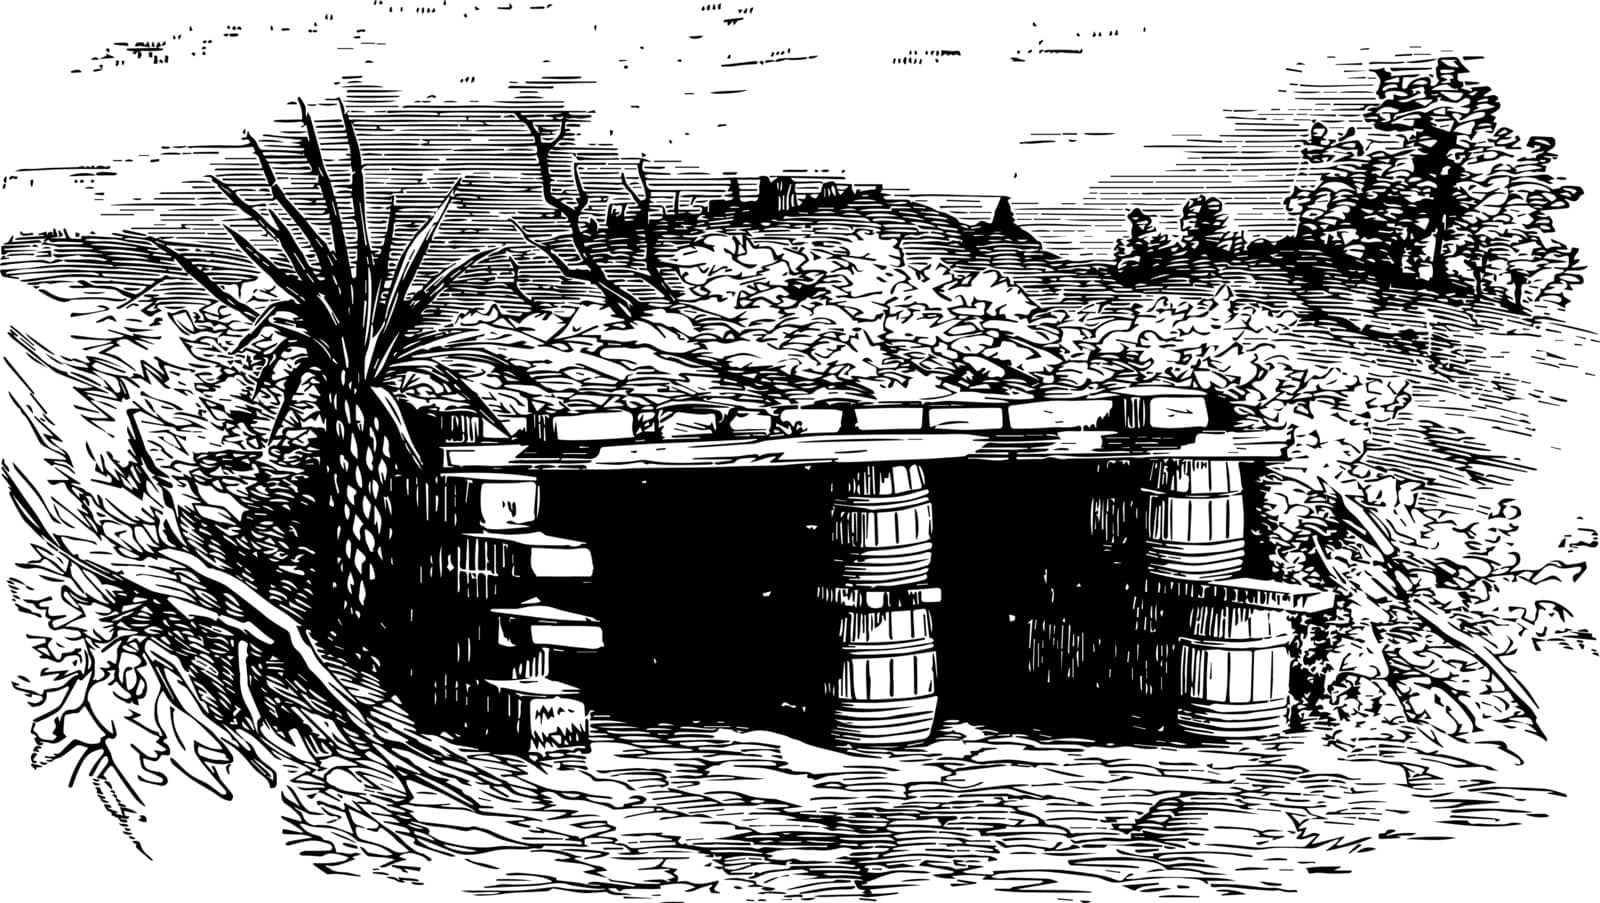 Bomb and Splinter Proof of Fort Wagner, vintage illustration. by Morphart